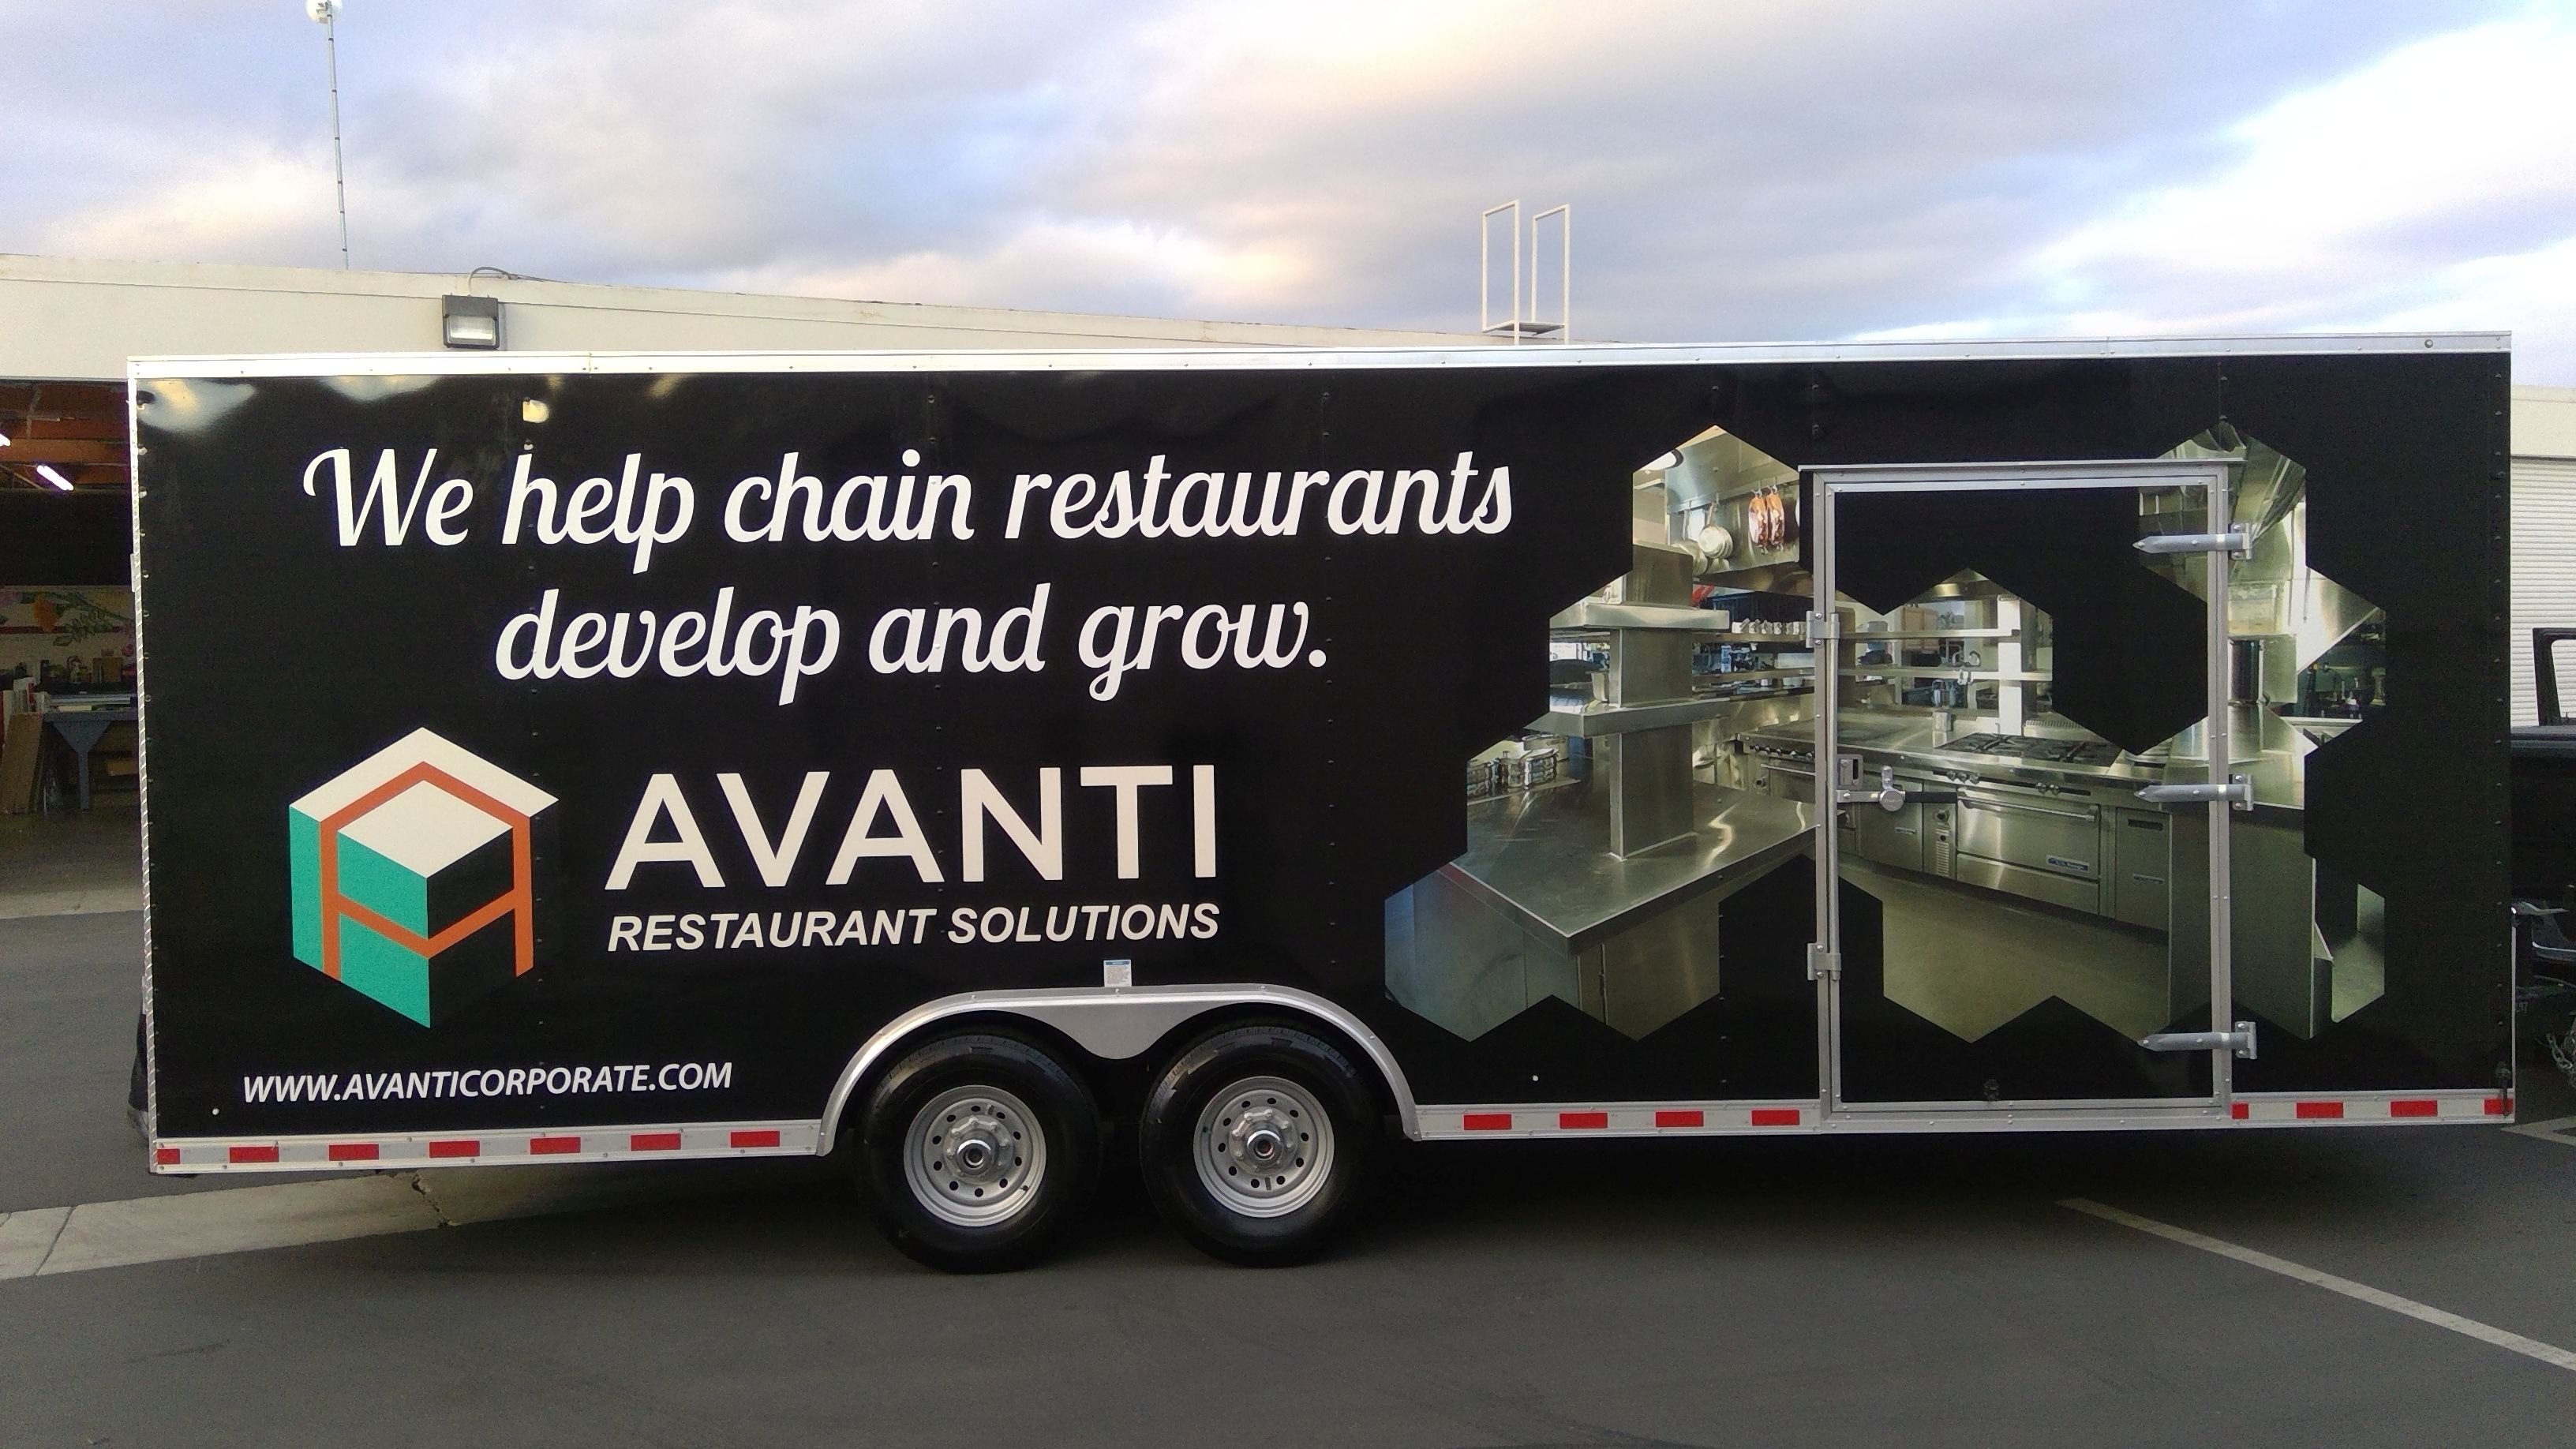 Avanti Restaurant Solutions